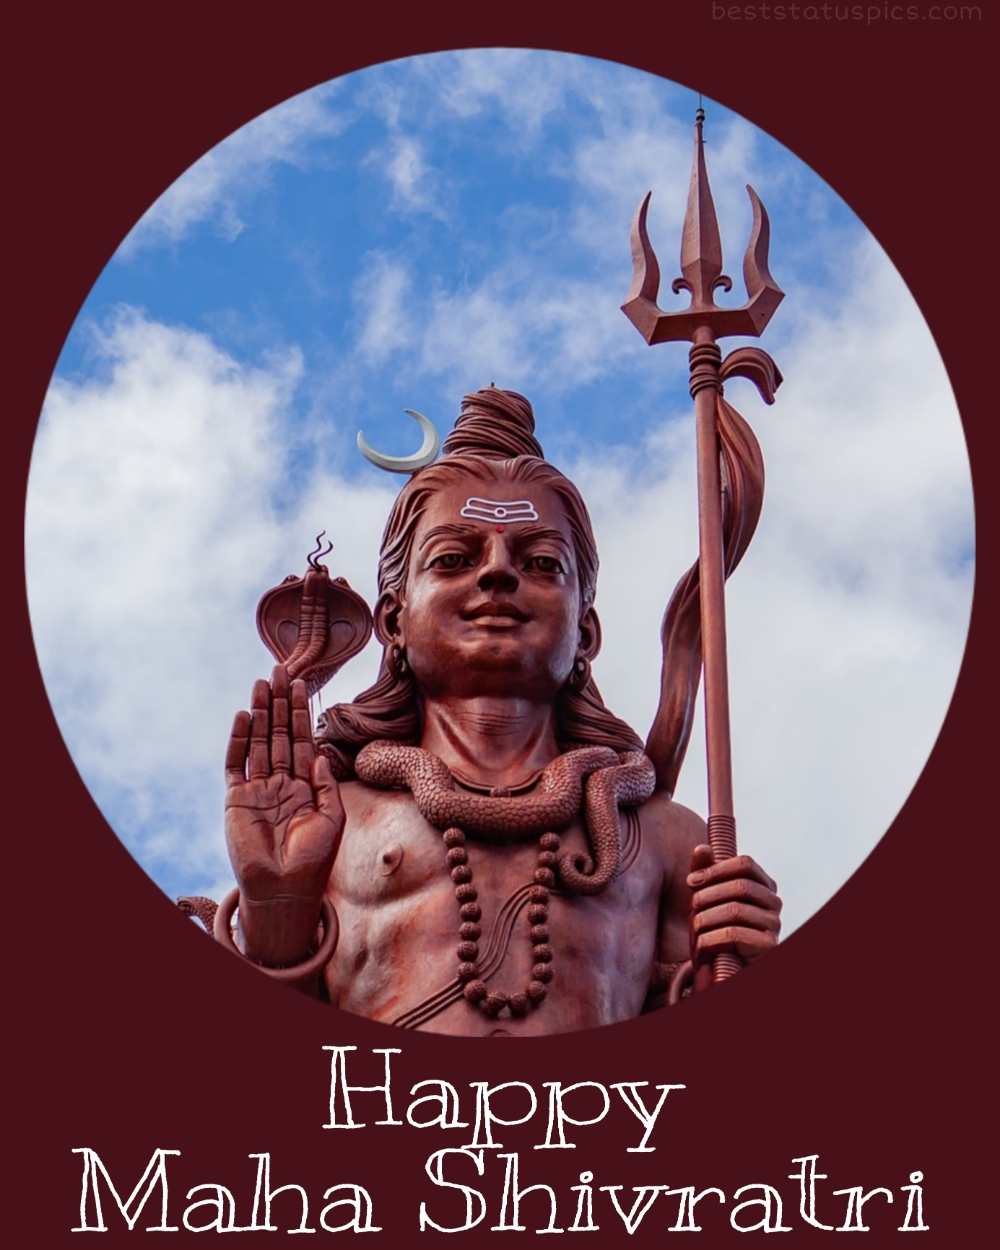 Happy Maha Shivratri 2022 wishes and greeting card